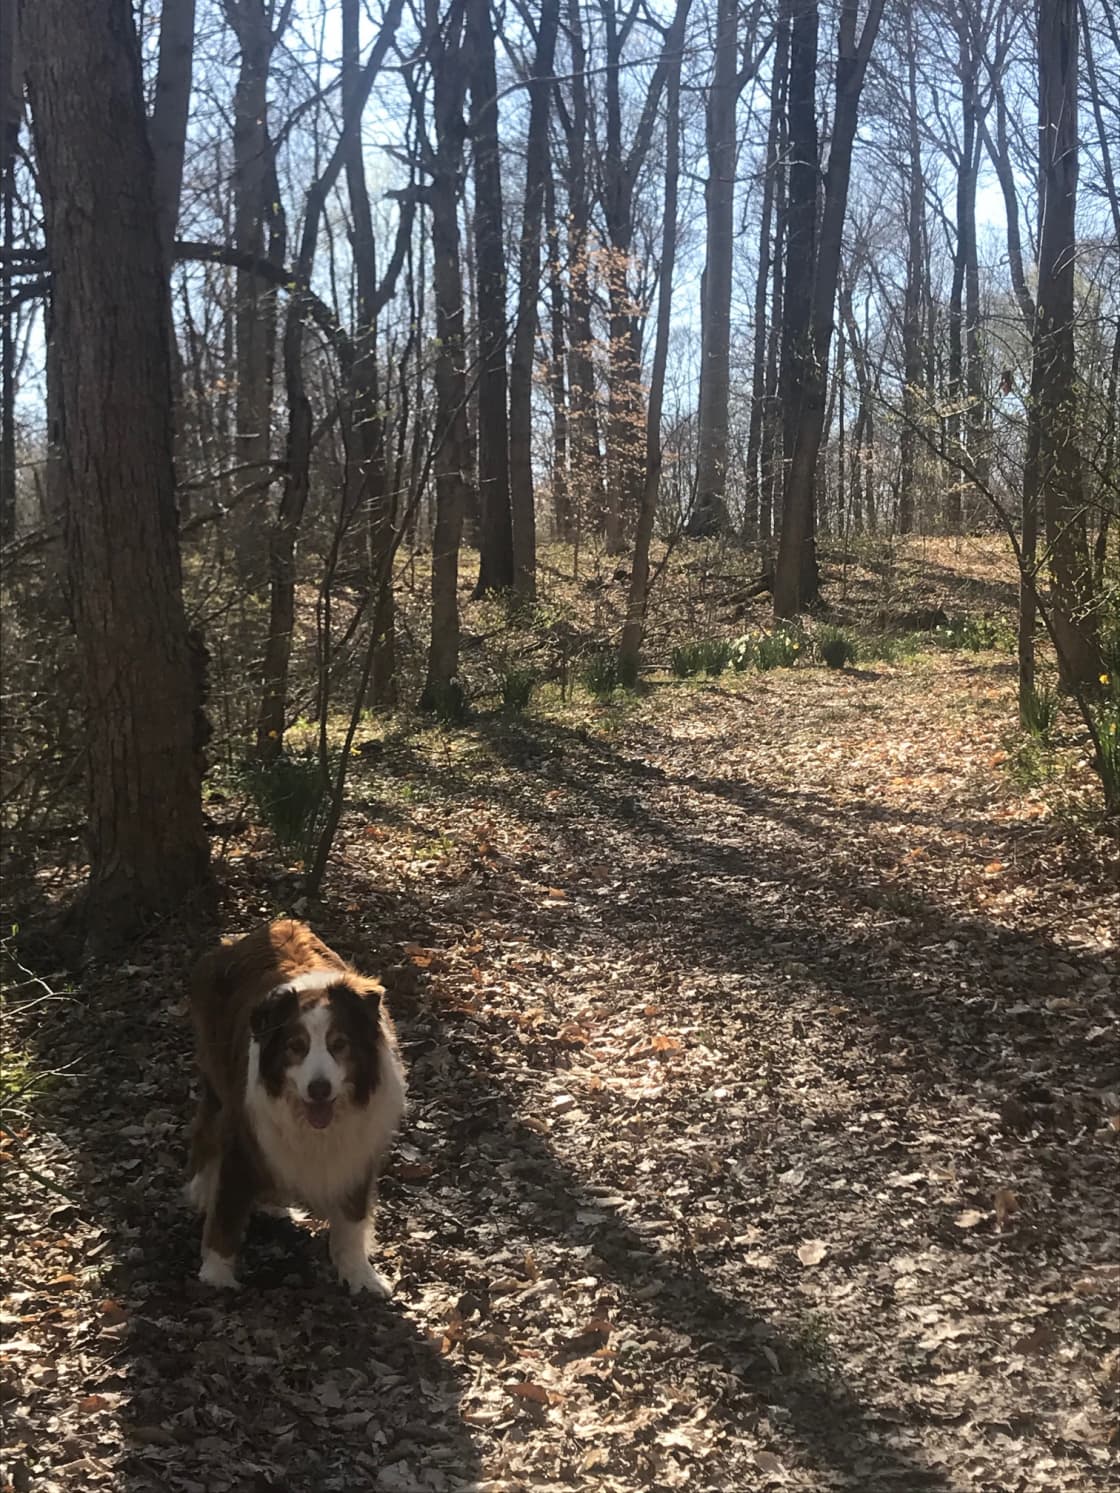 Apollo the Spirit Dog on a hike